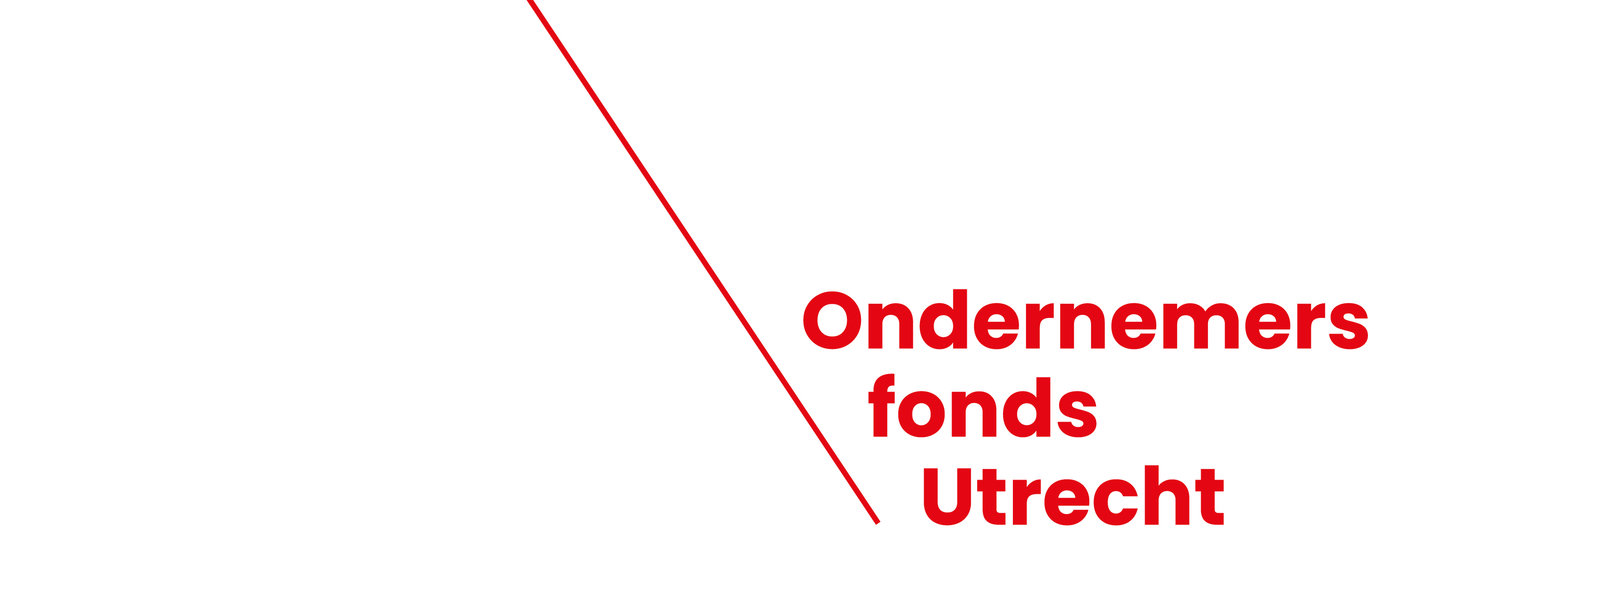 Ondernemers fonds Utrecht